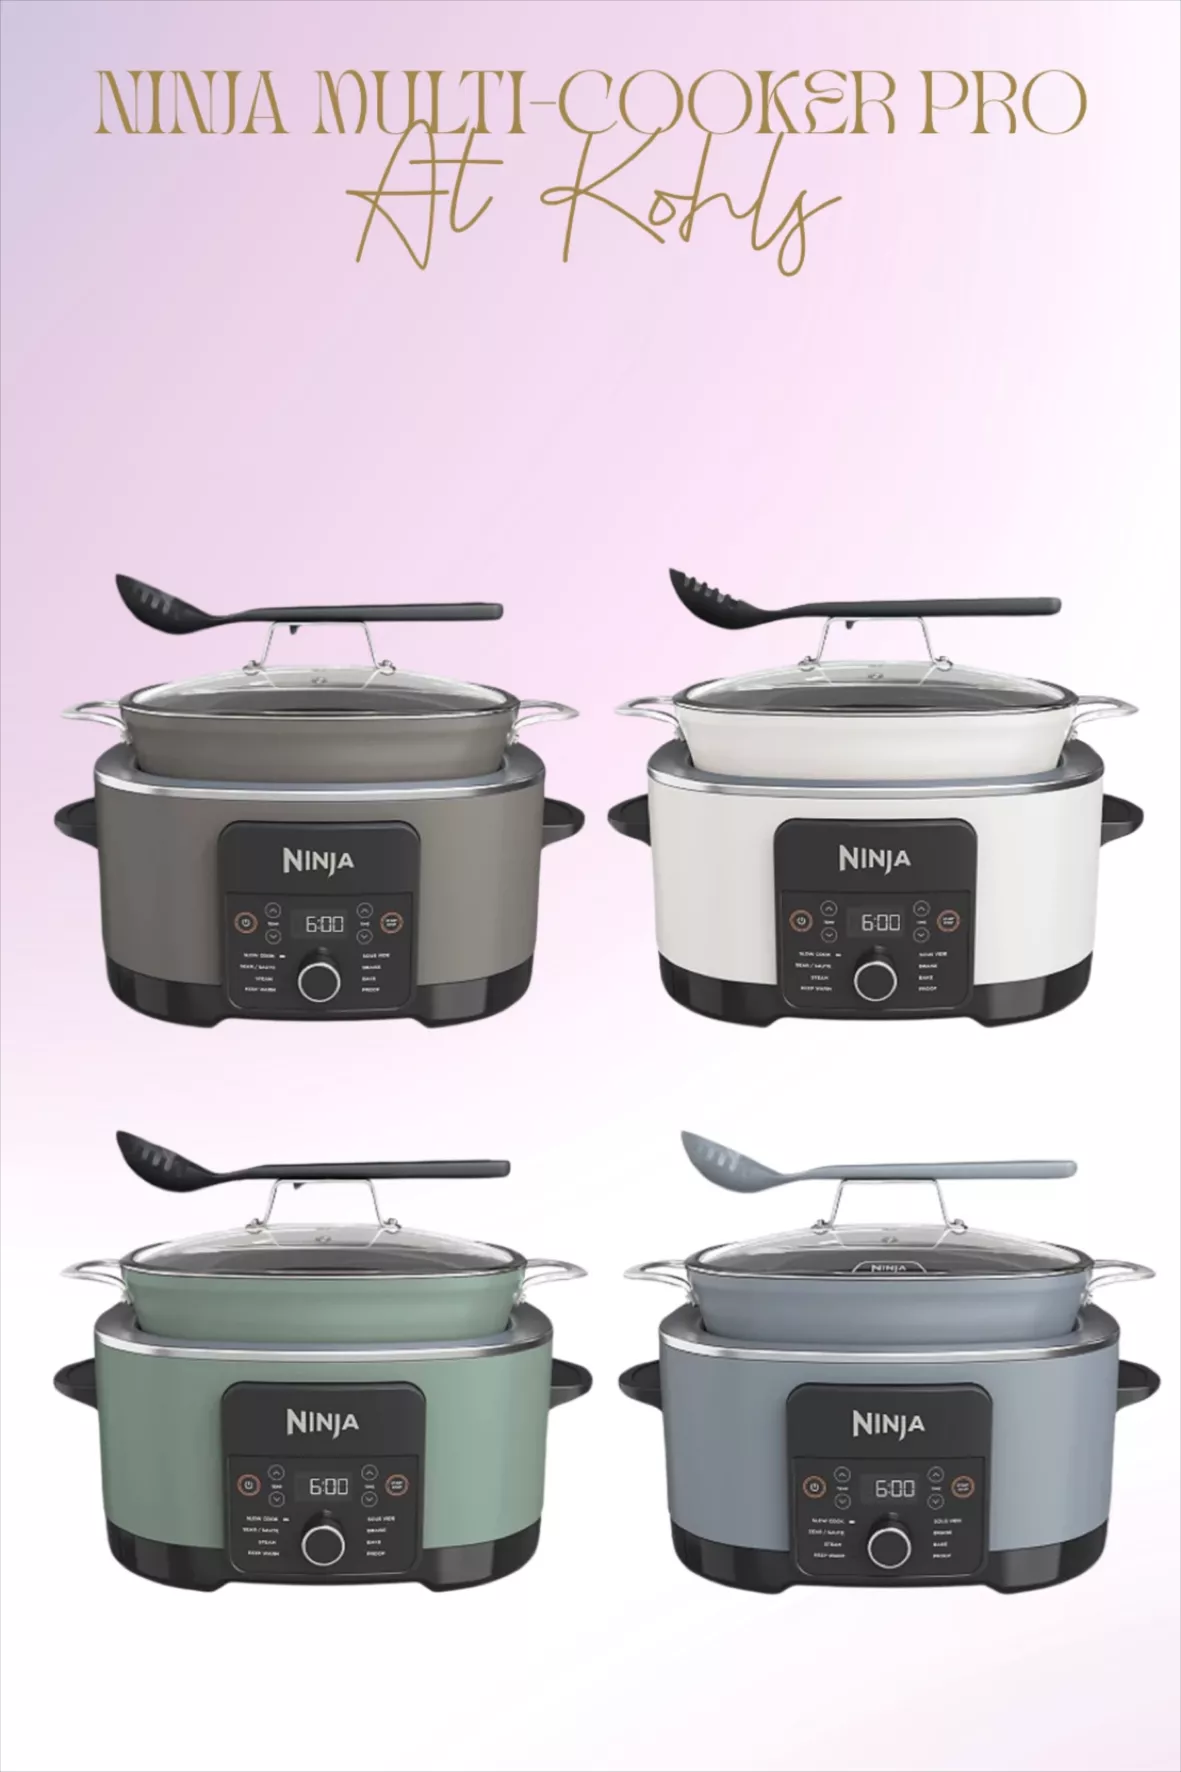 Ninja Foodi PossibleCooker PRO 8.5-Quart Multi-Cooker